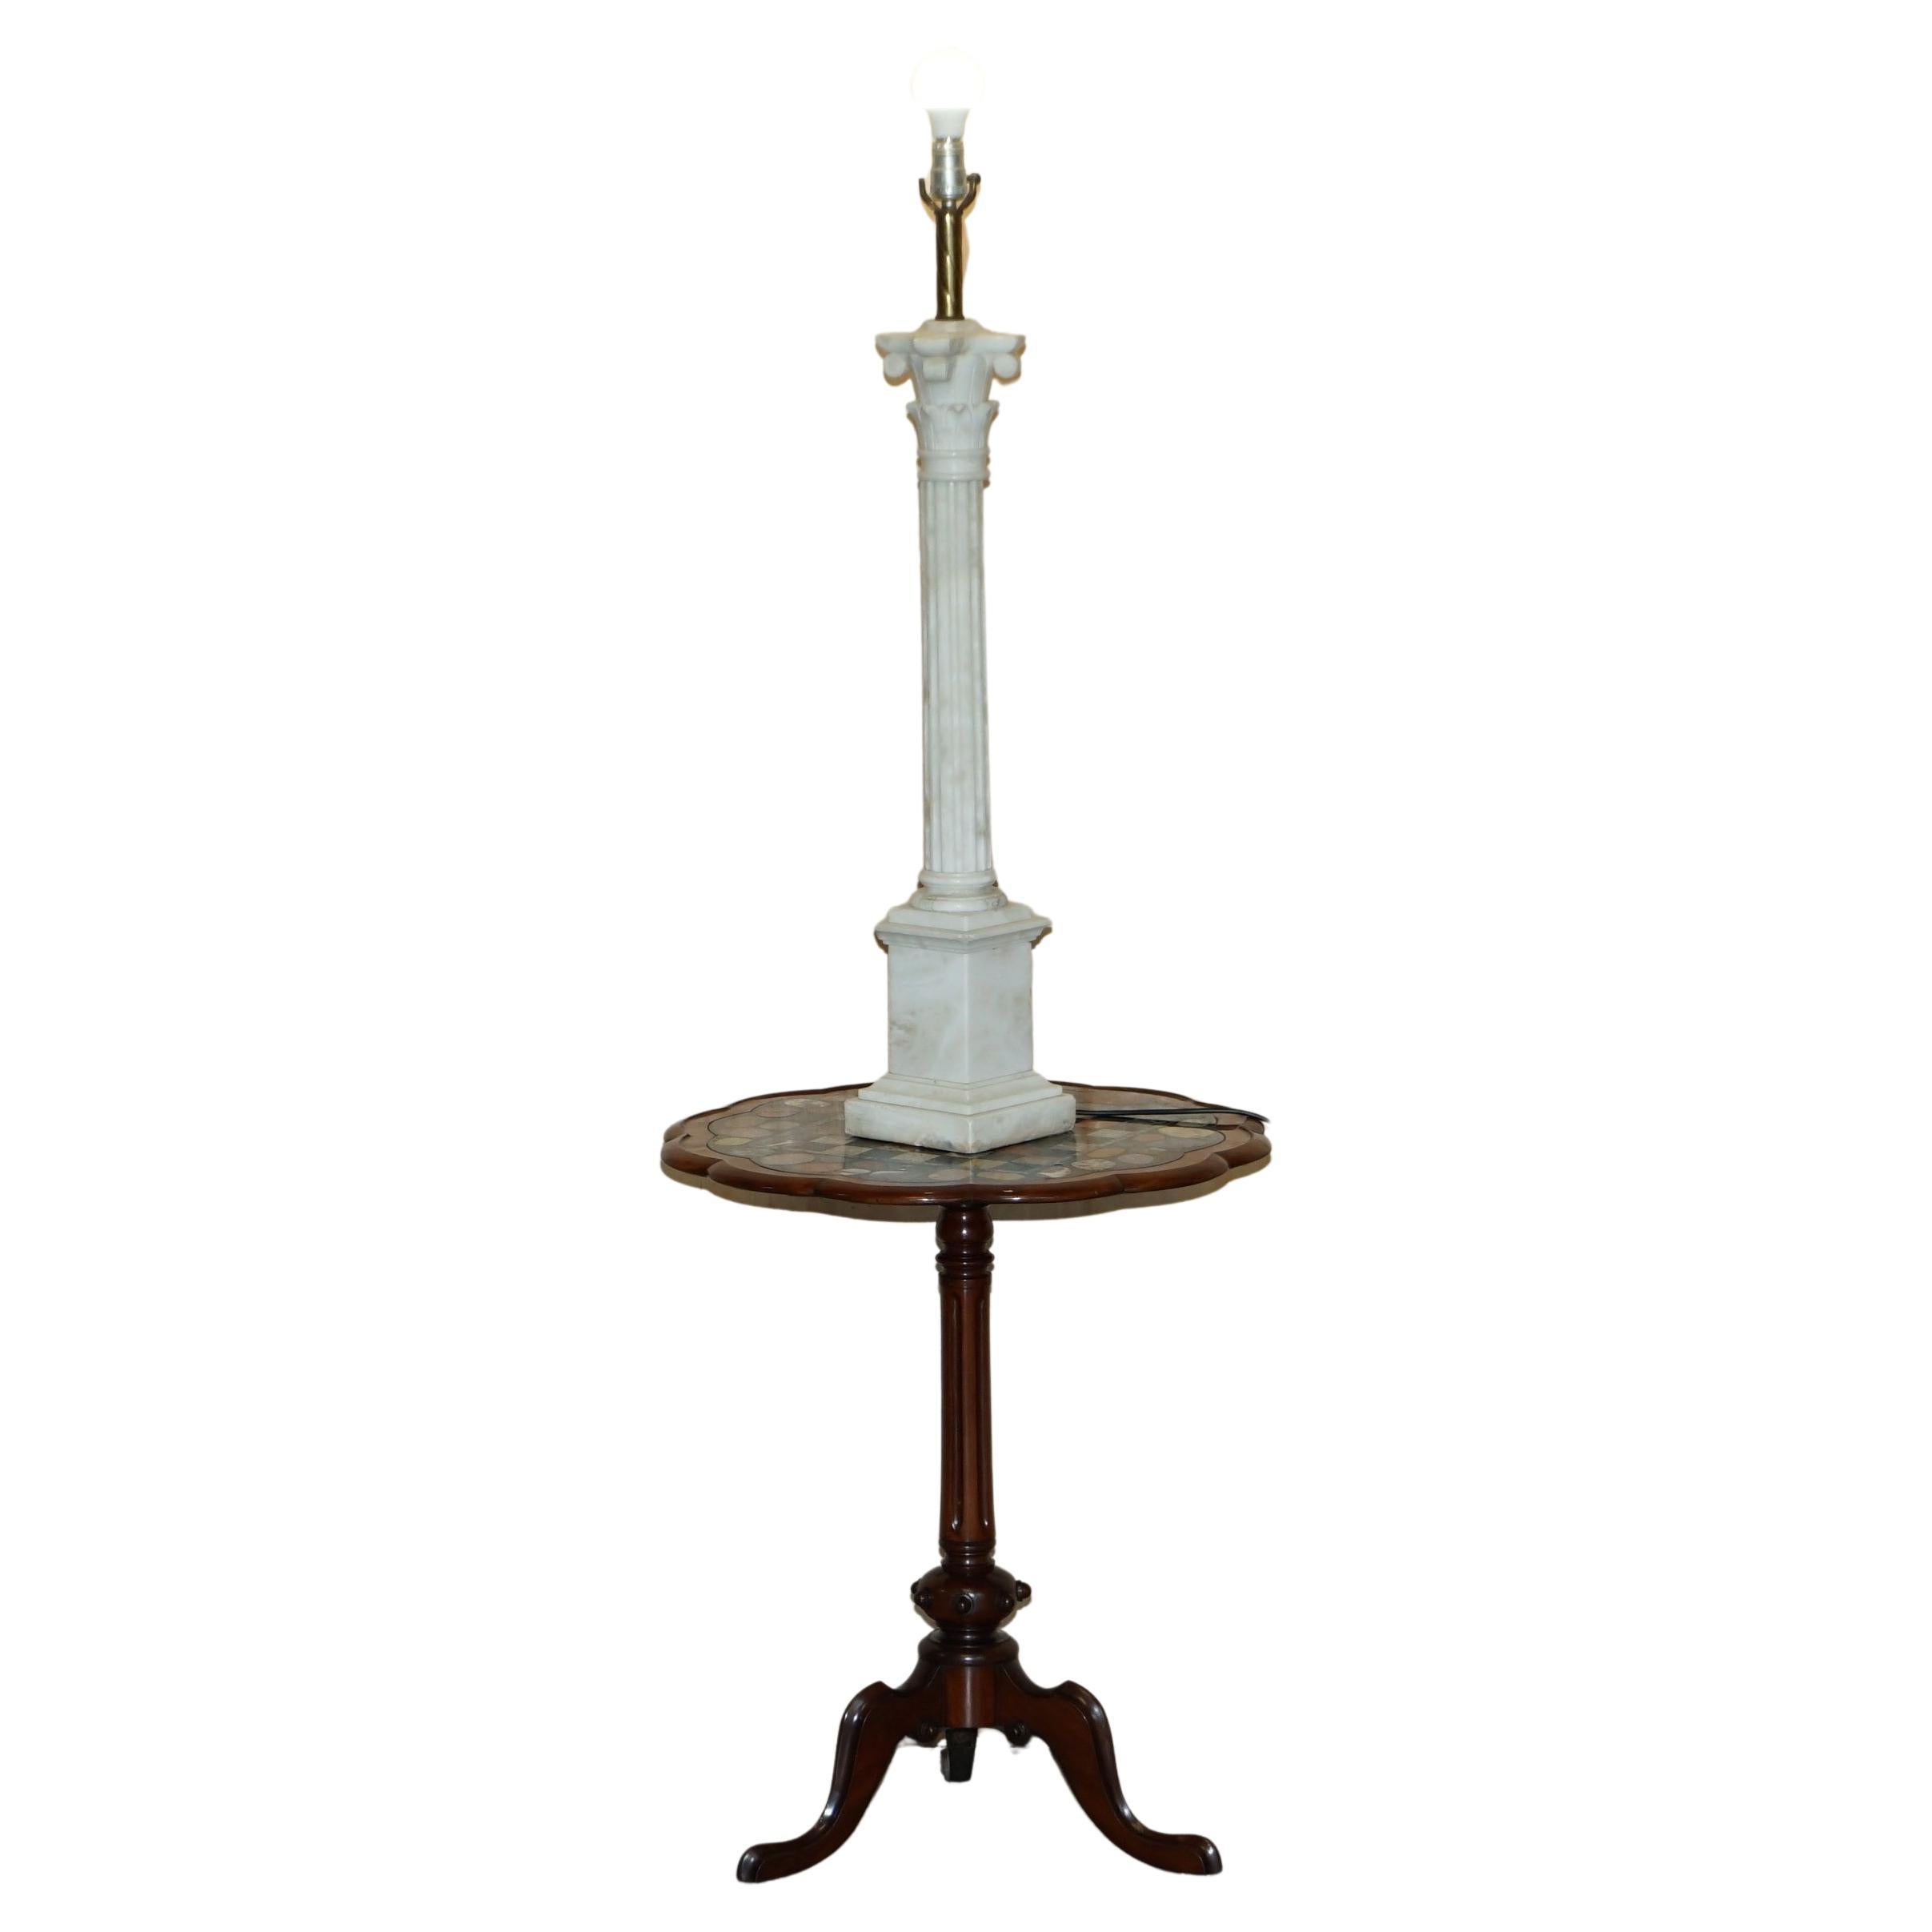 Huge 96cm Tall Antique Corinthian Pillar Italian Carrara Marble Table Lamp For Sale